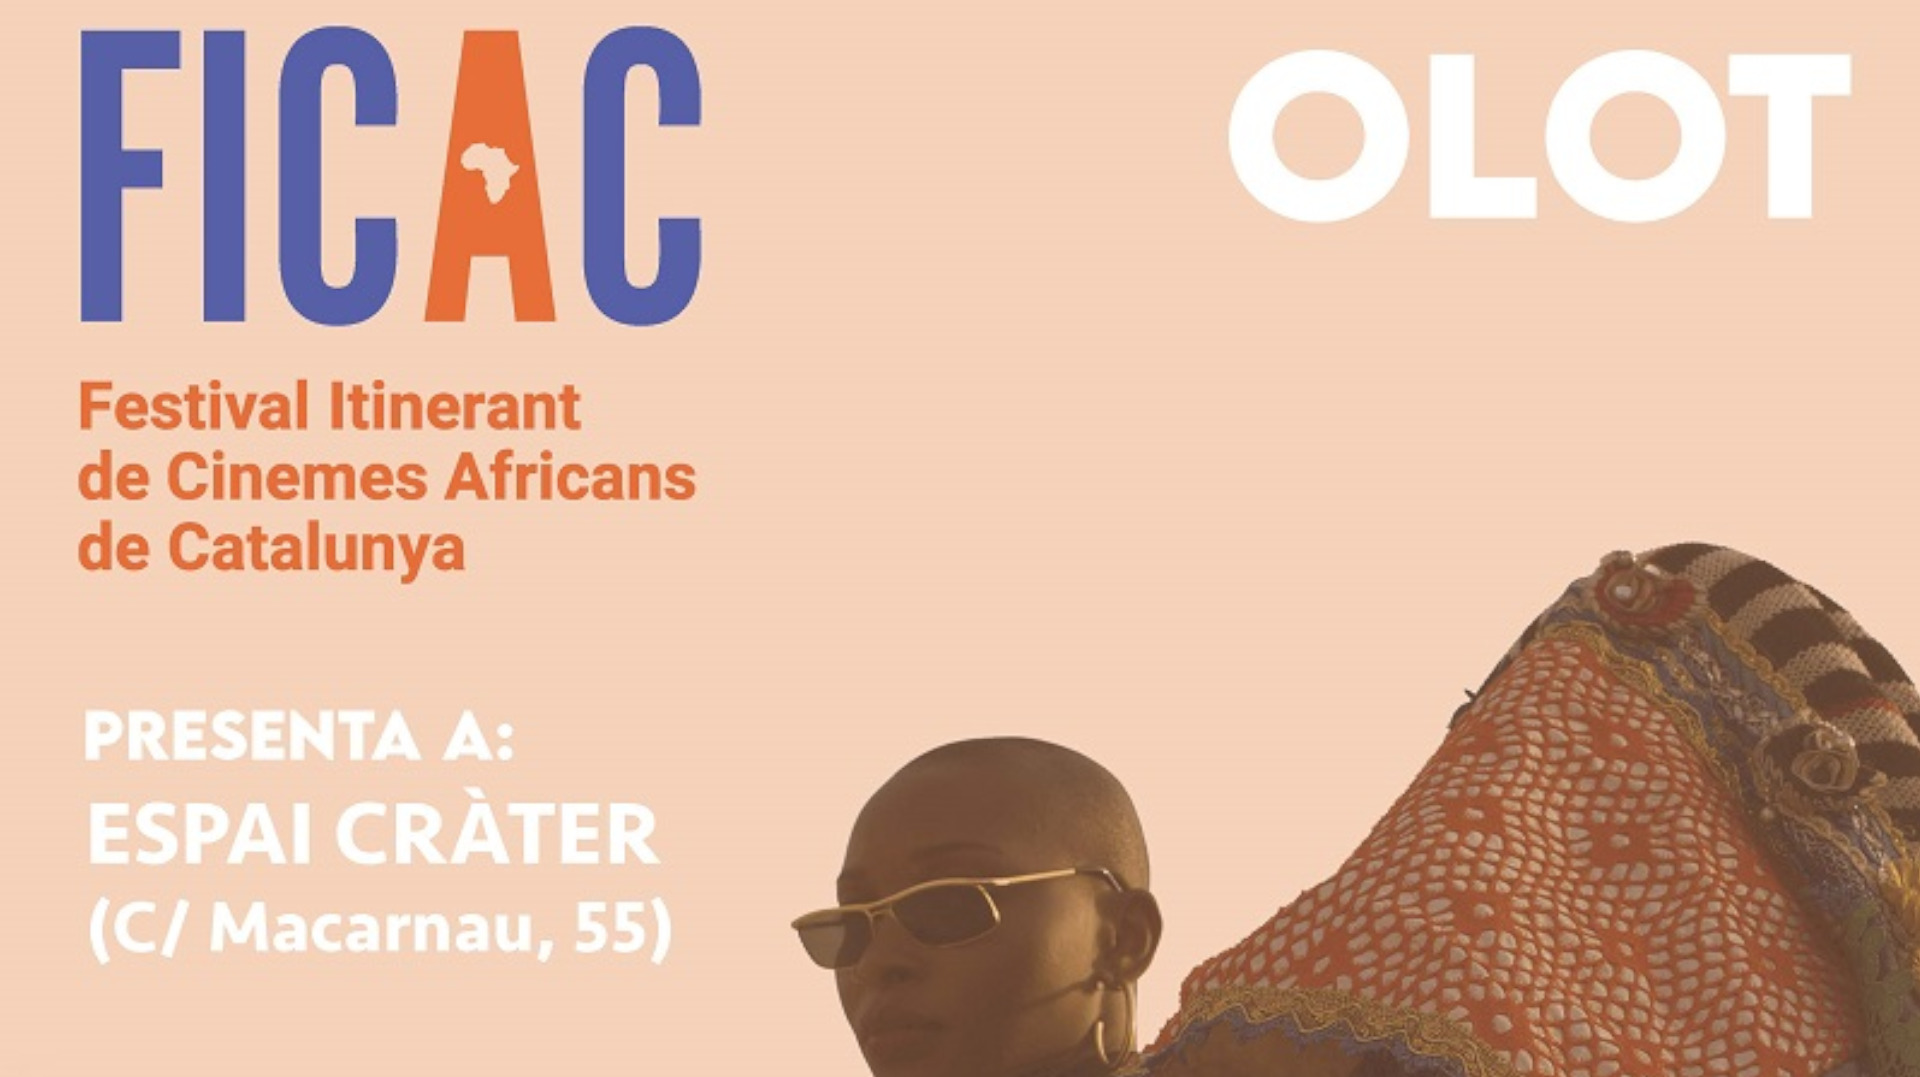 Festival itinerant de cinemes africans de Catalunya